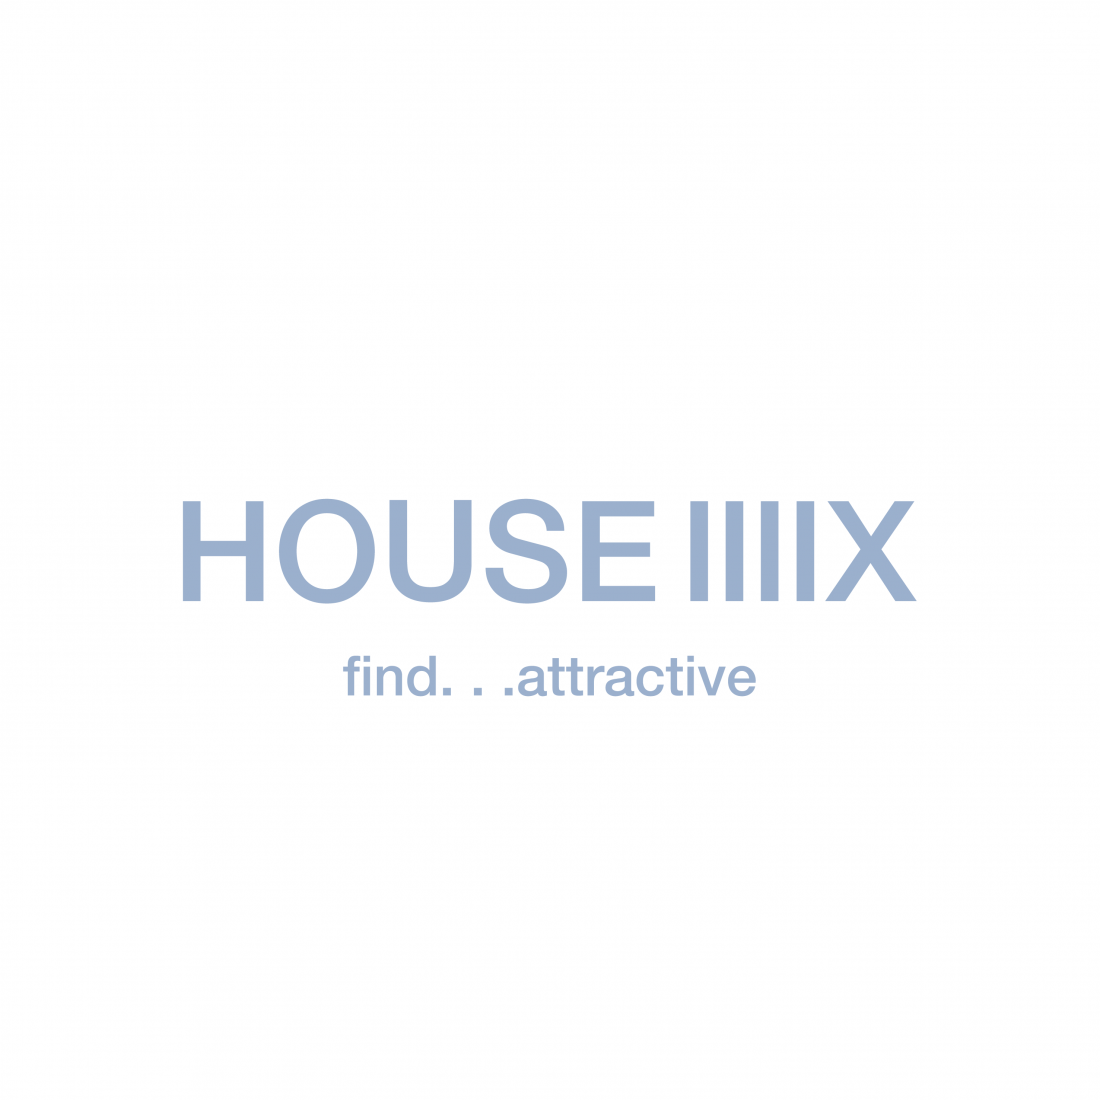 HOUSE llllX メイン画像